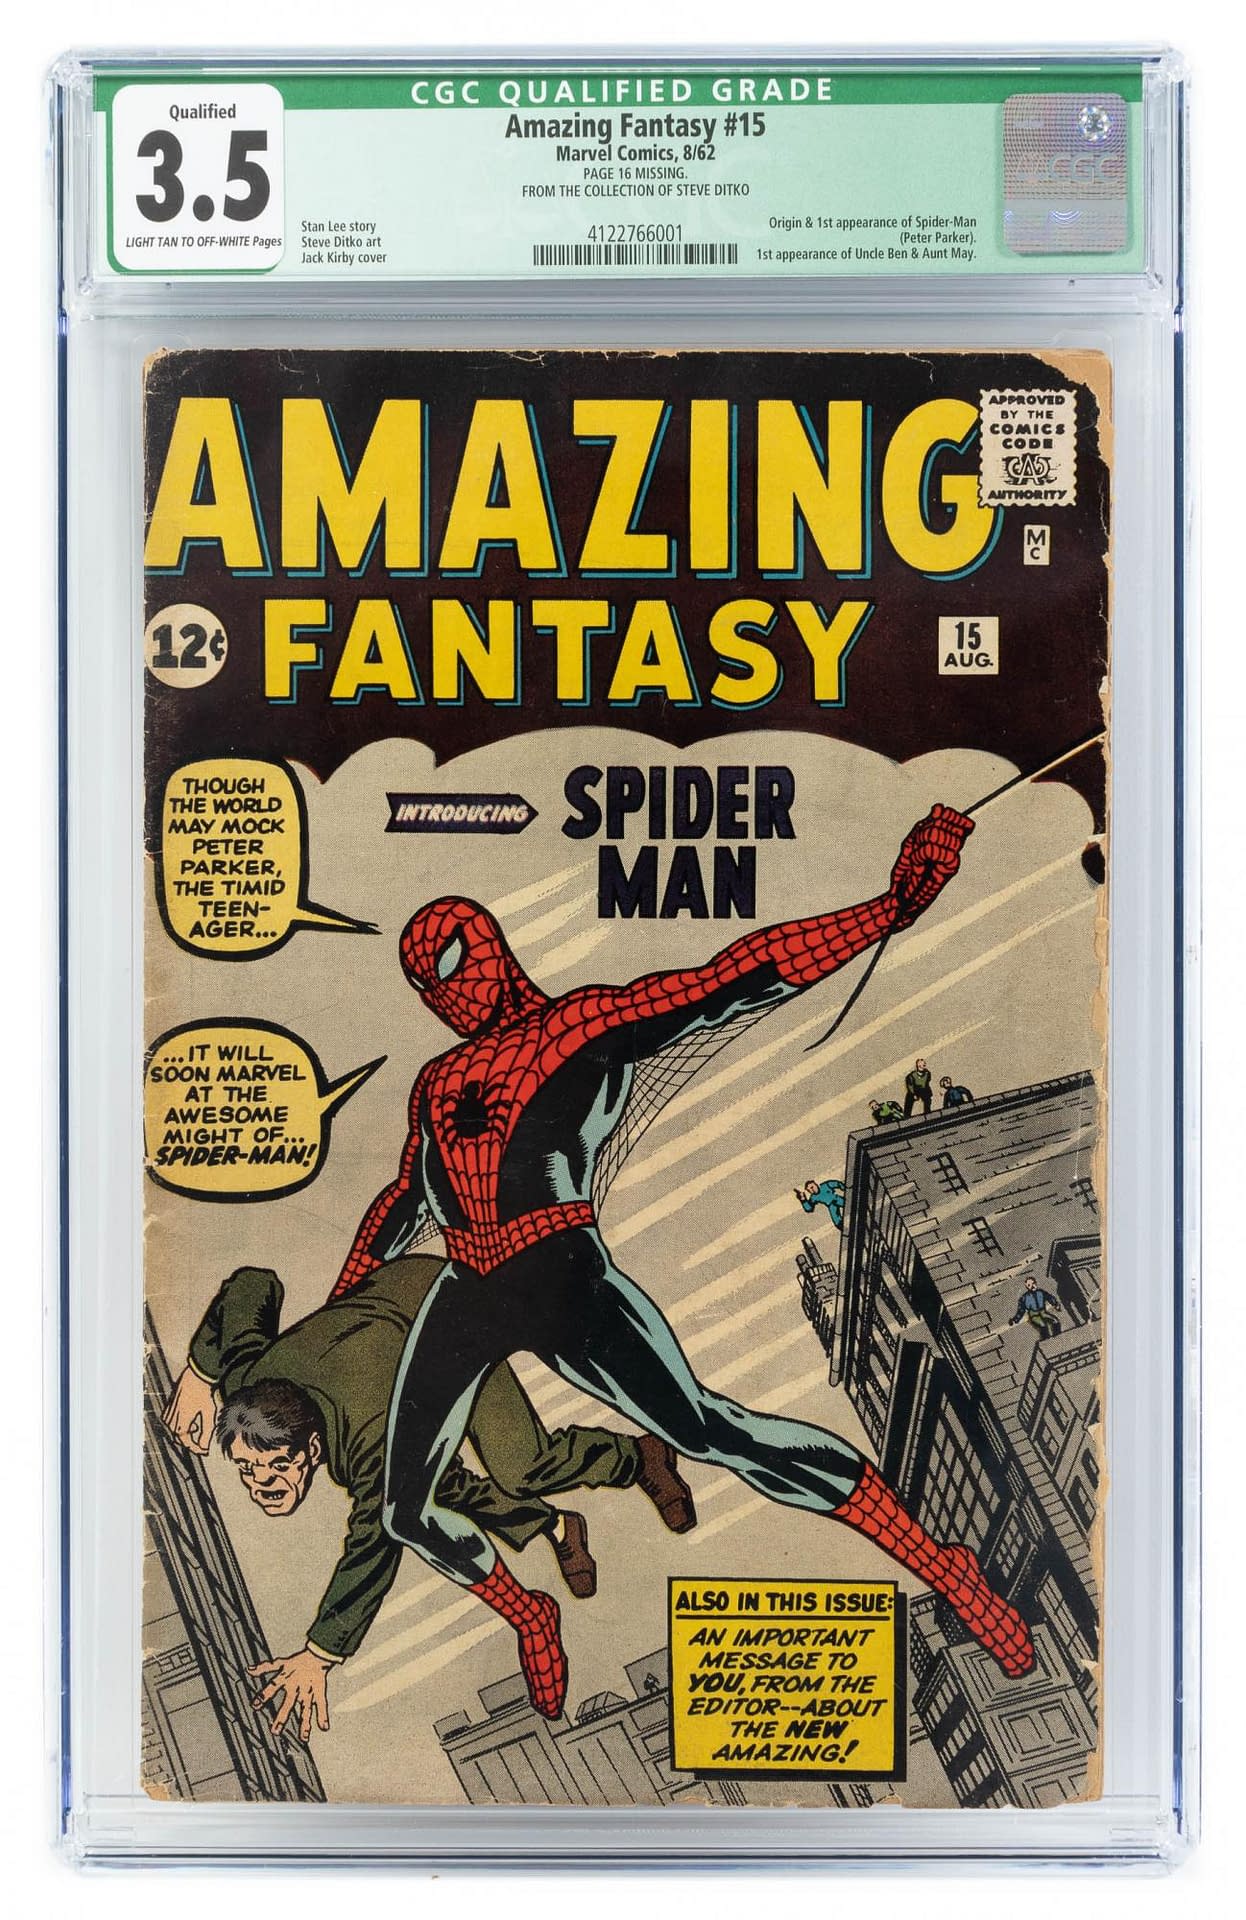 Amazing Fantasy #15 Spider-Man by Steve Ditko 11x14 FRAMED Marvel Comics  Art Print Poster